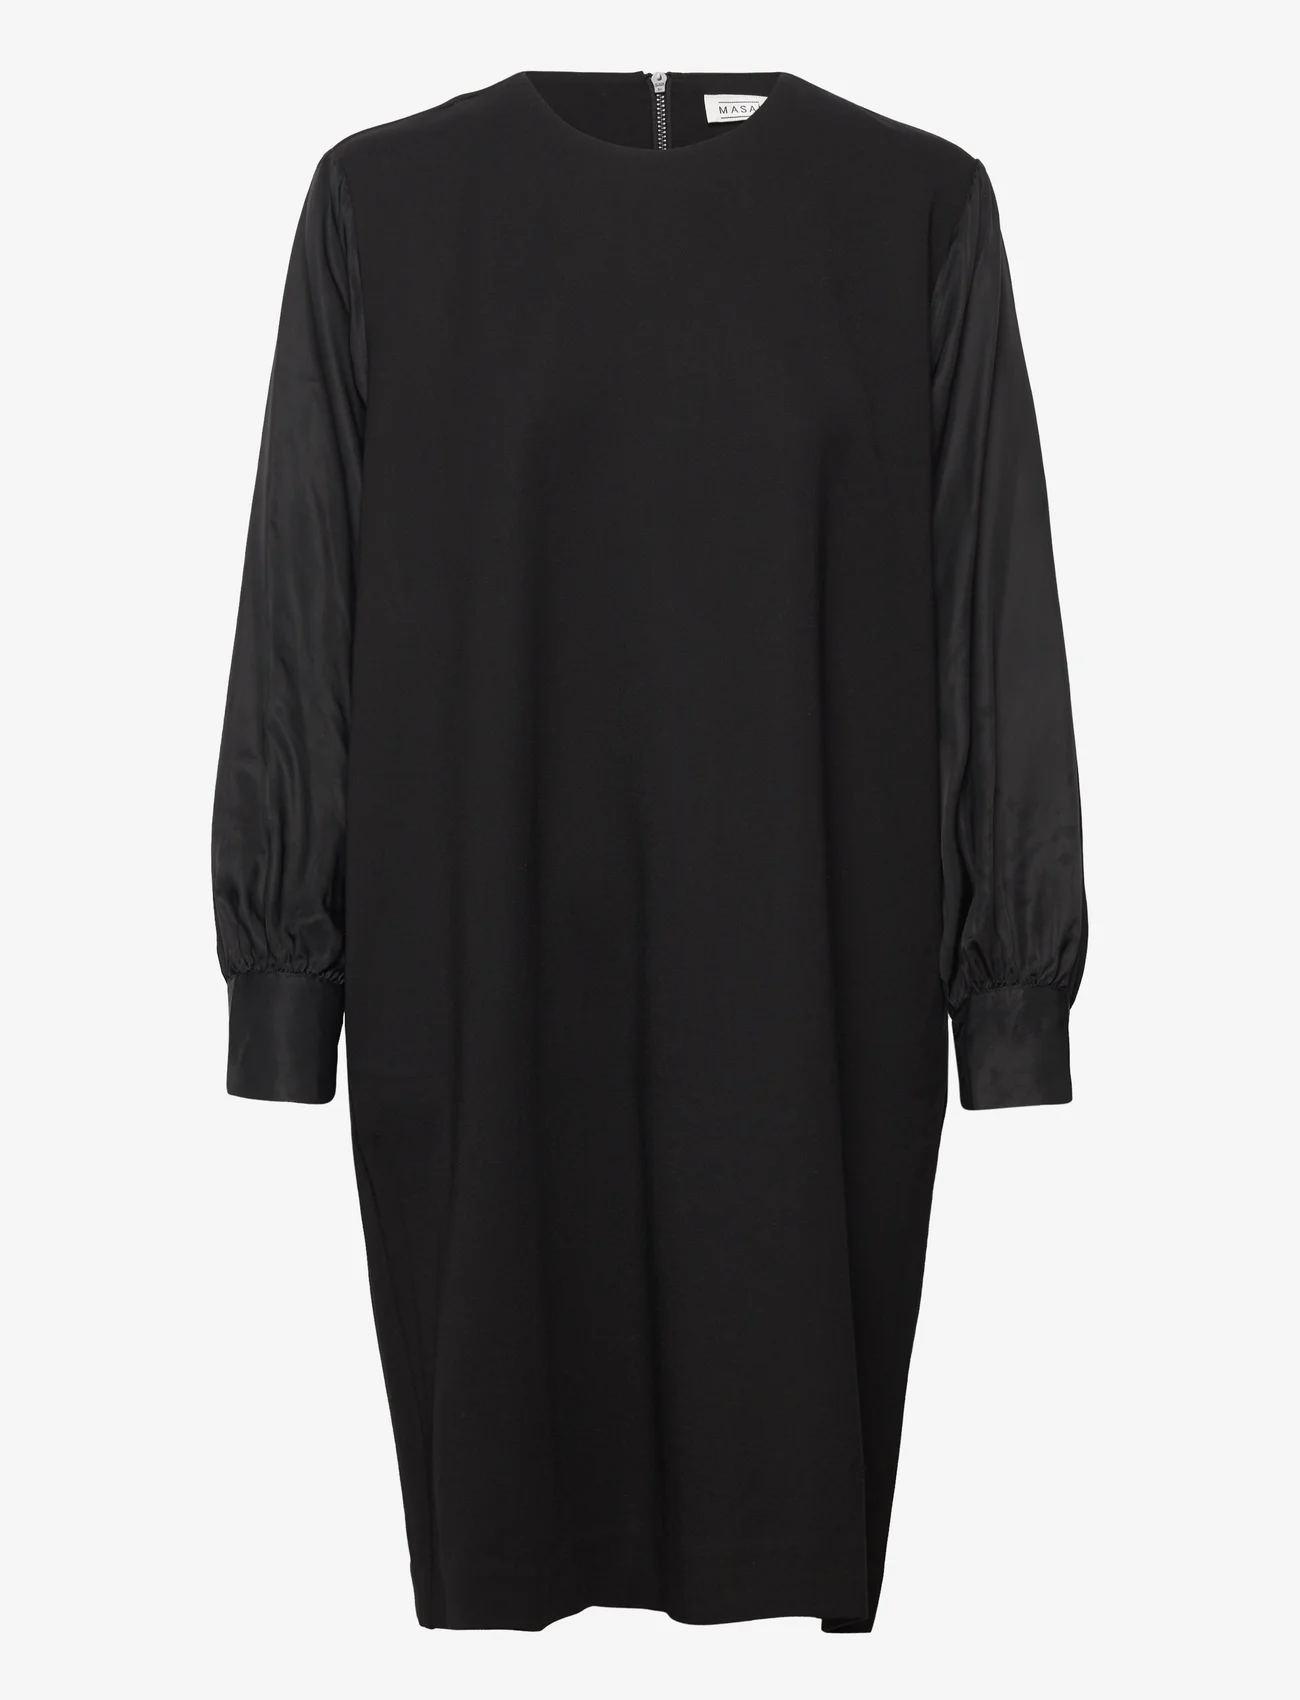 Masai - Nicolina - korte kjoler - black - 0